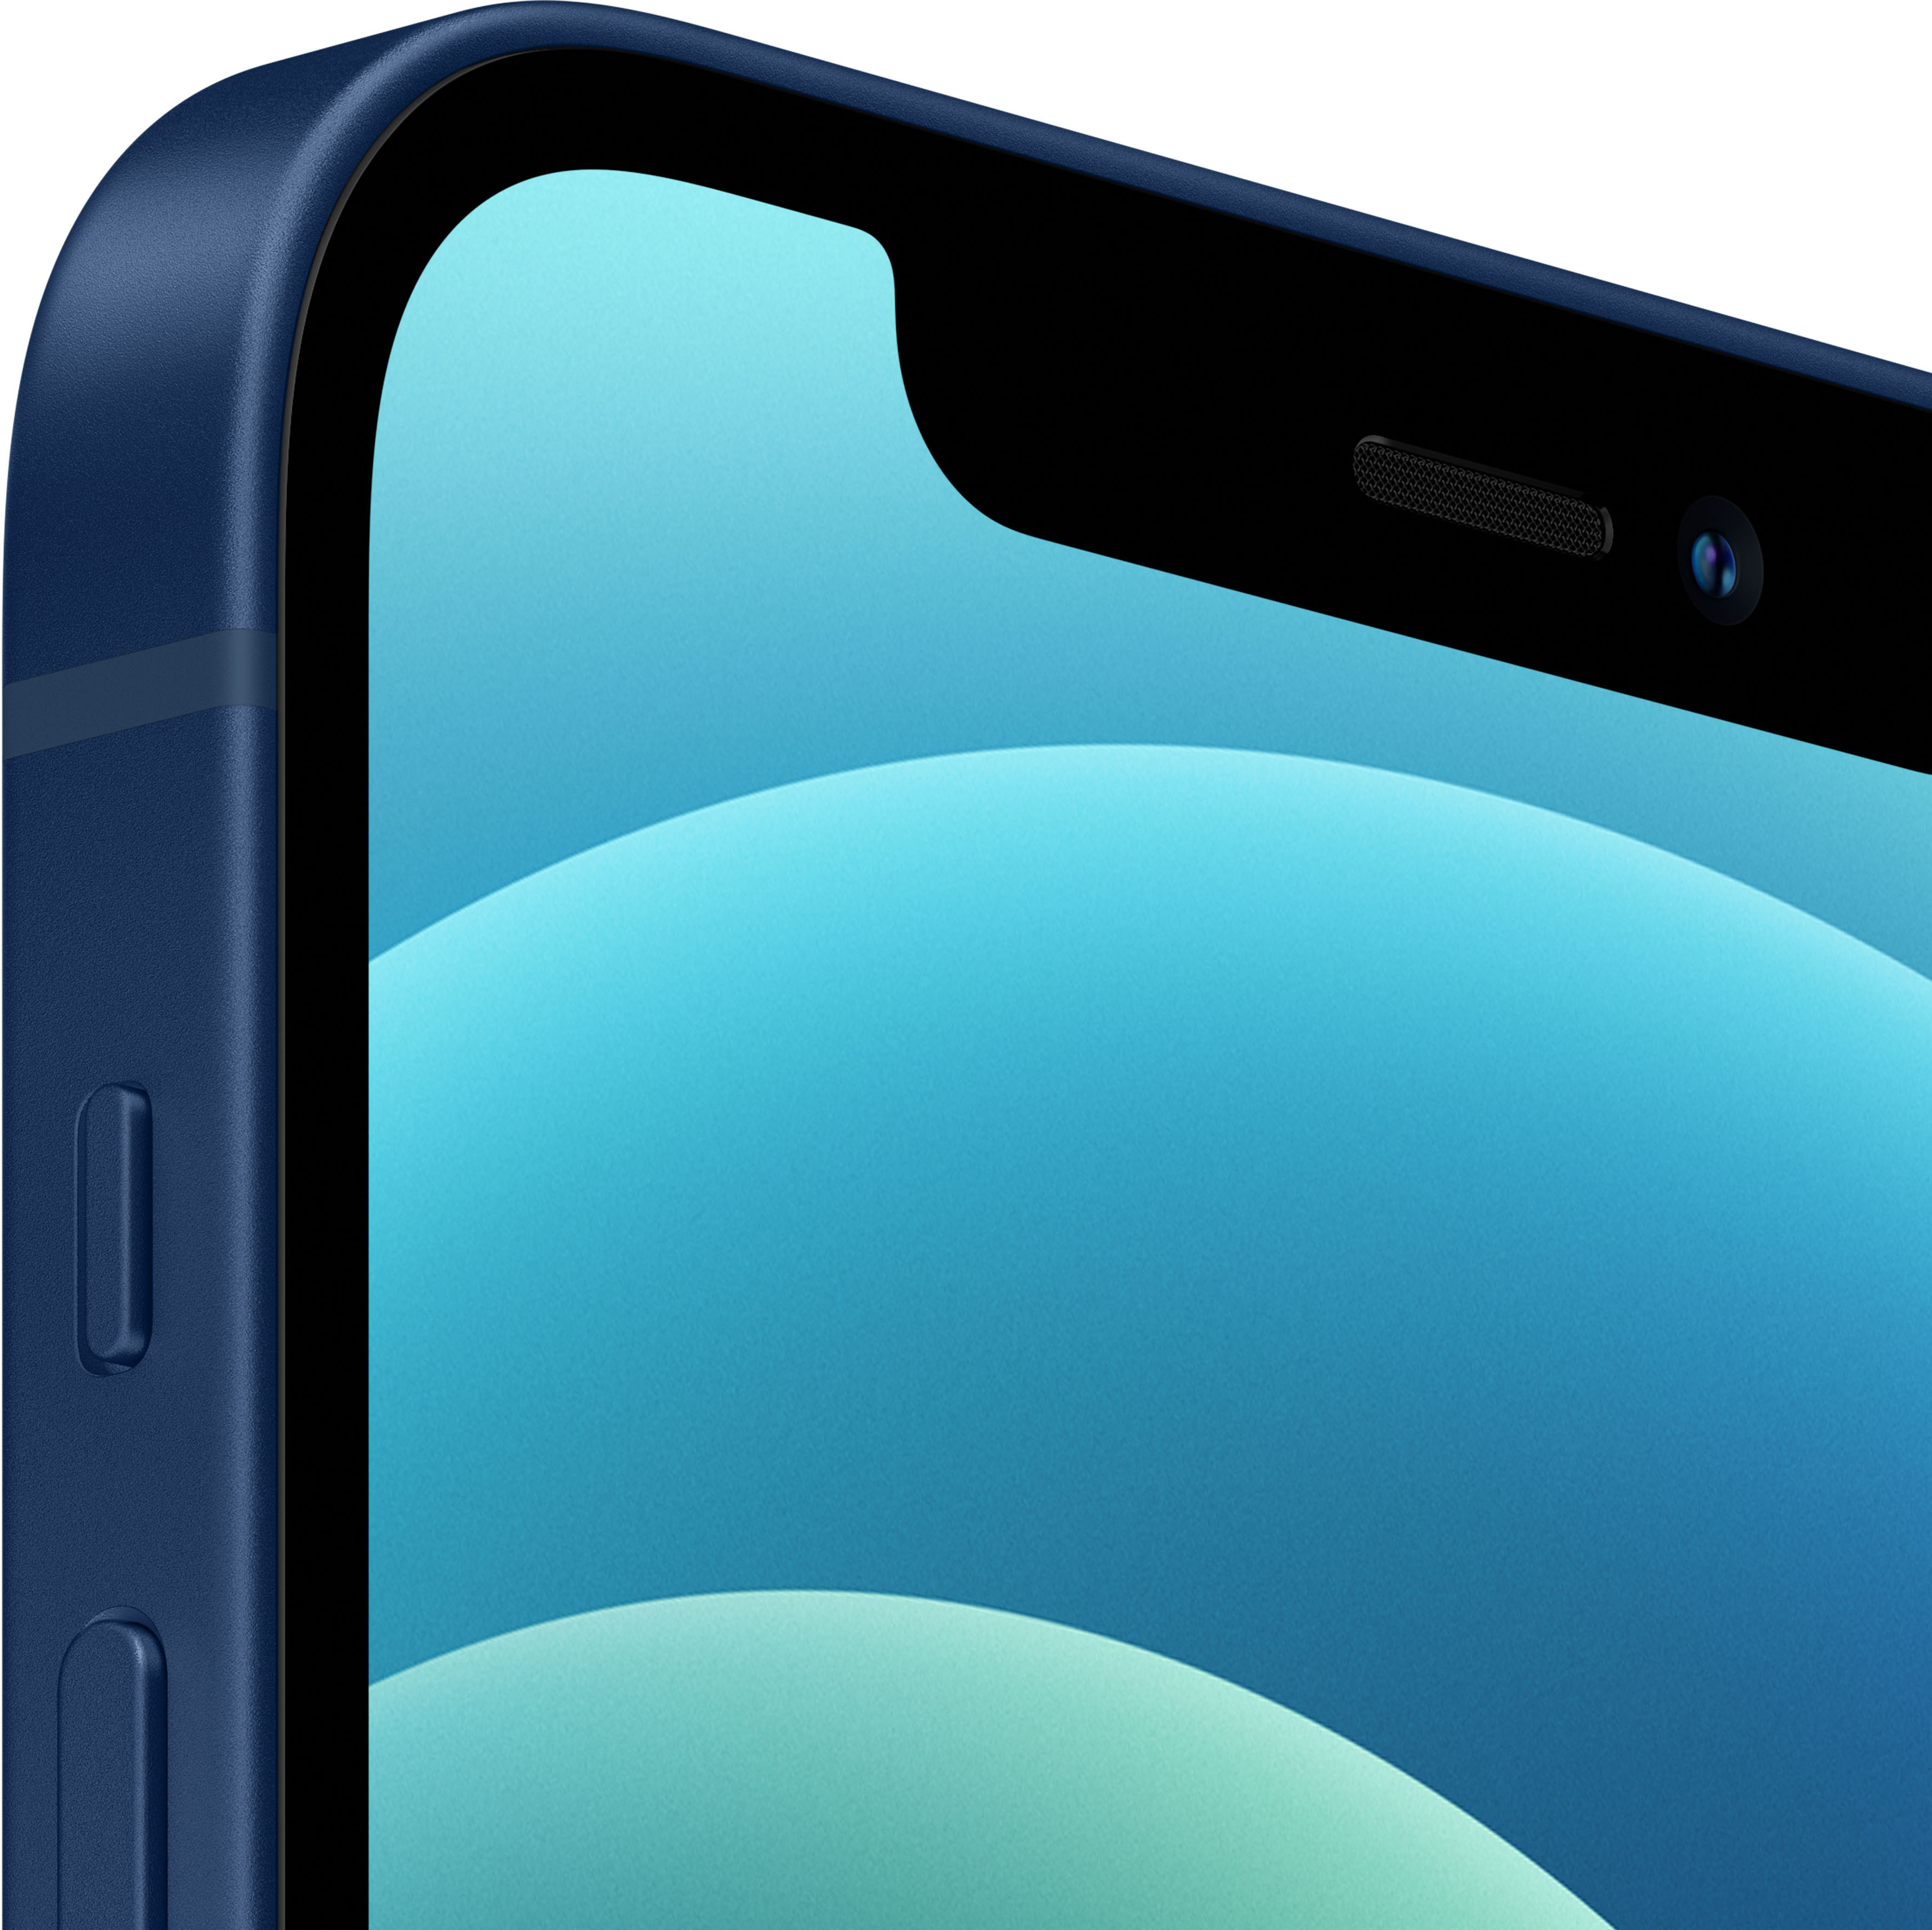 Apple iPhone 12 64GB (синий)